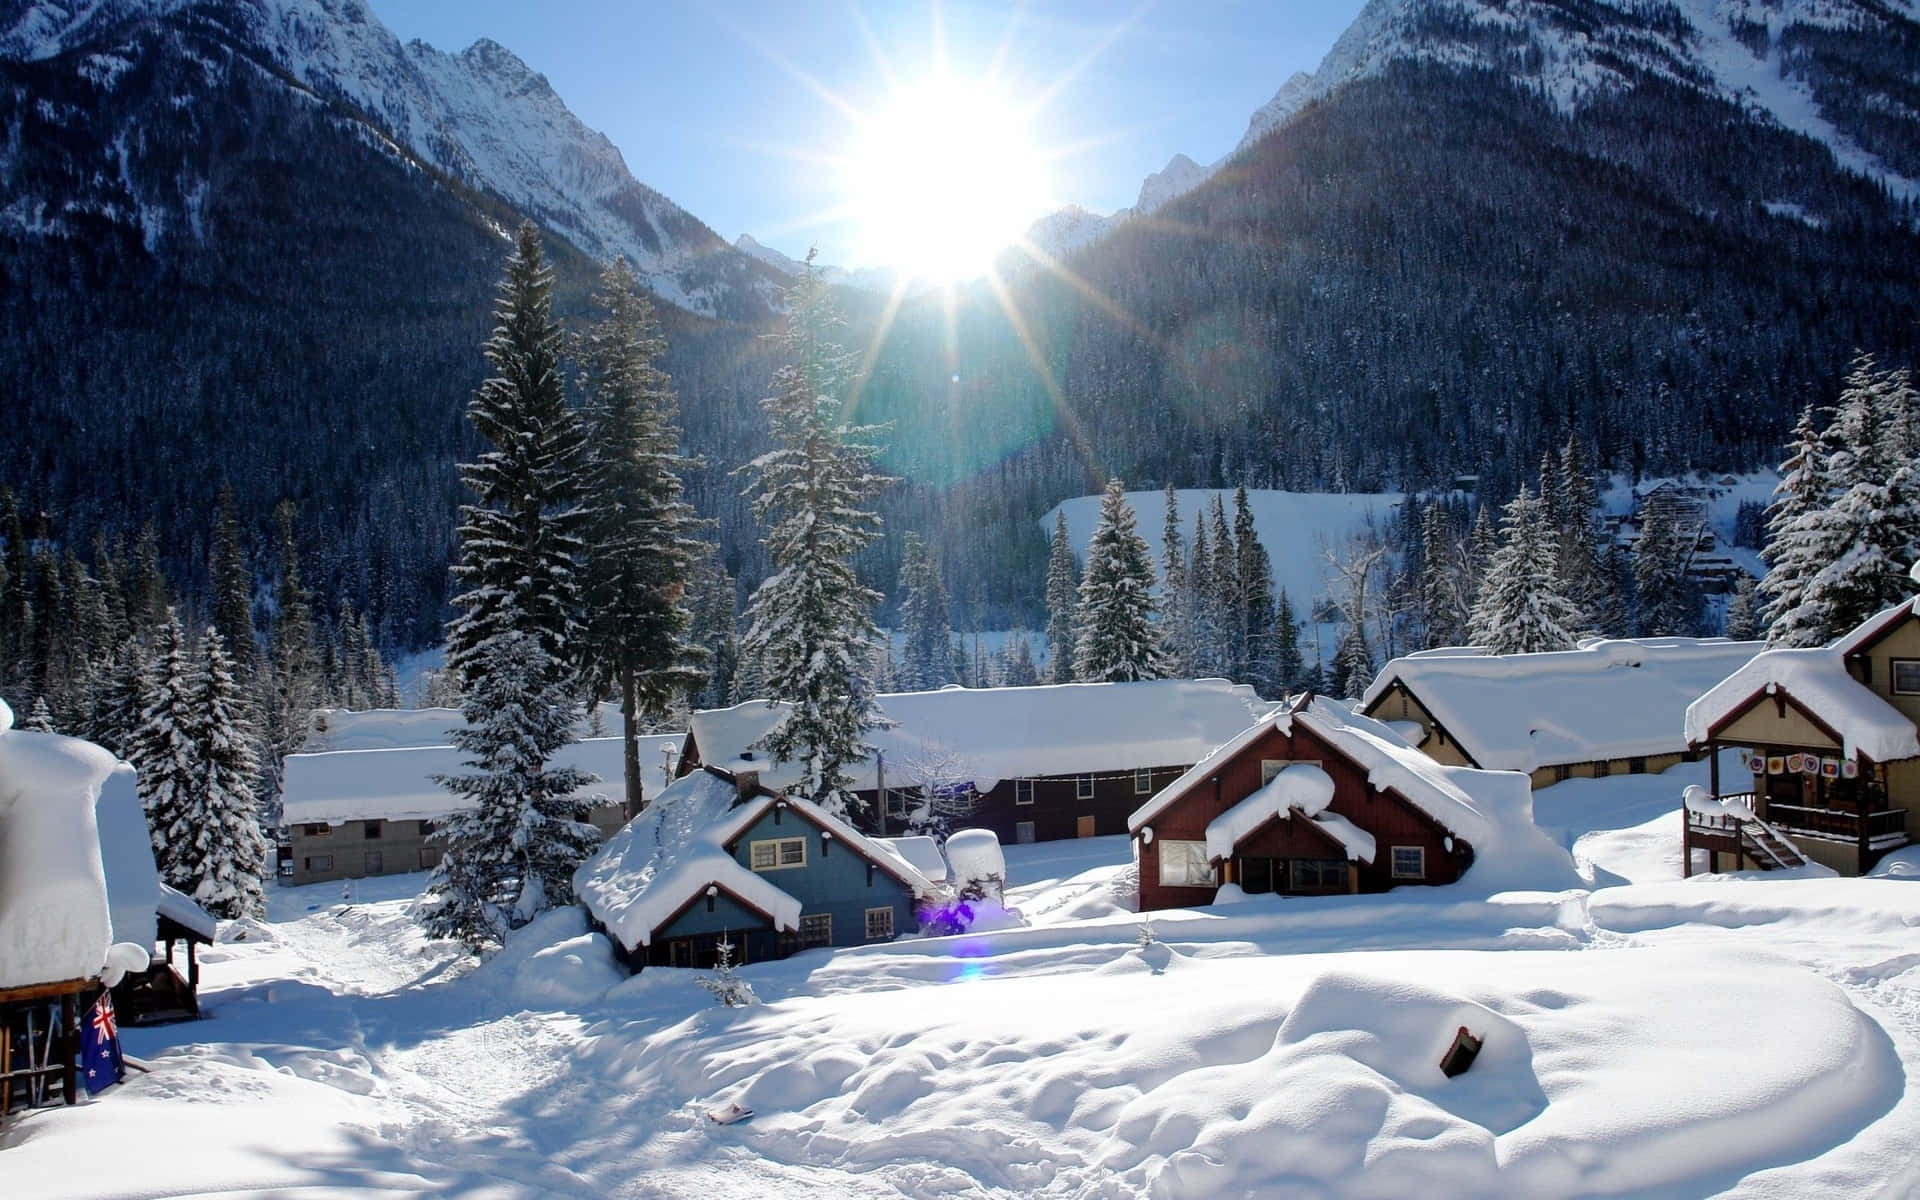 Picturesque Snowy Village in Winter Wallpaper